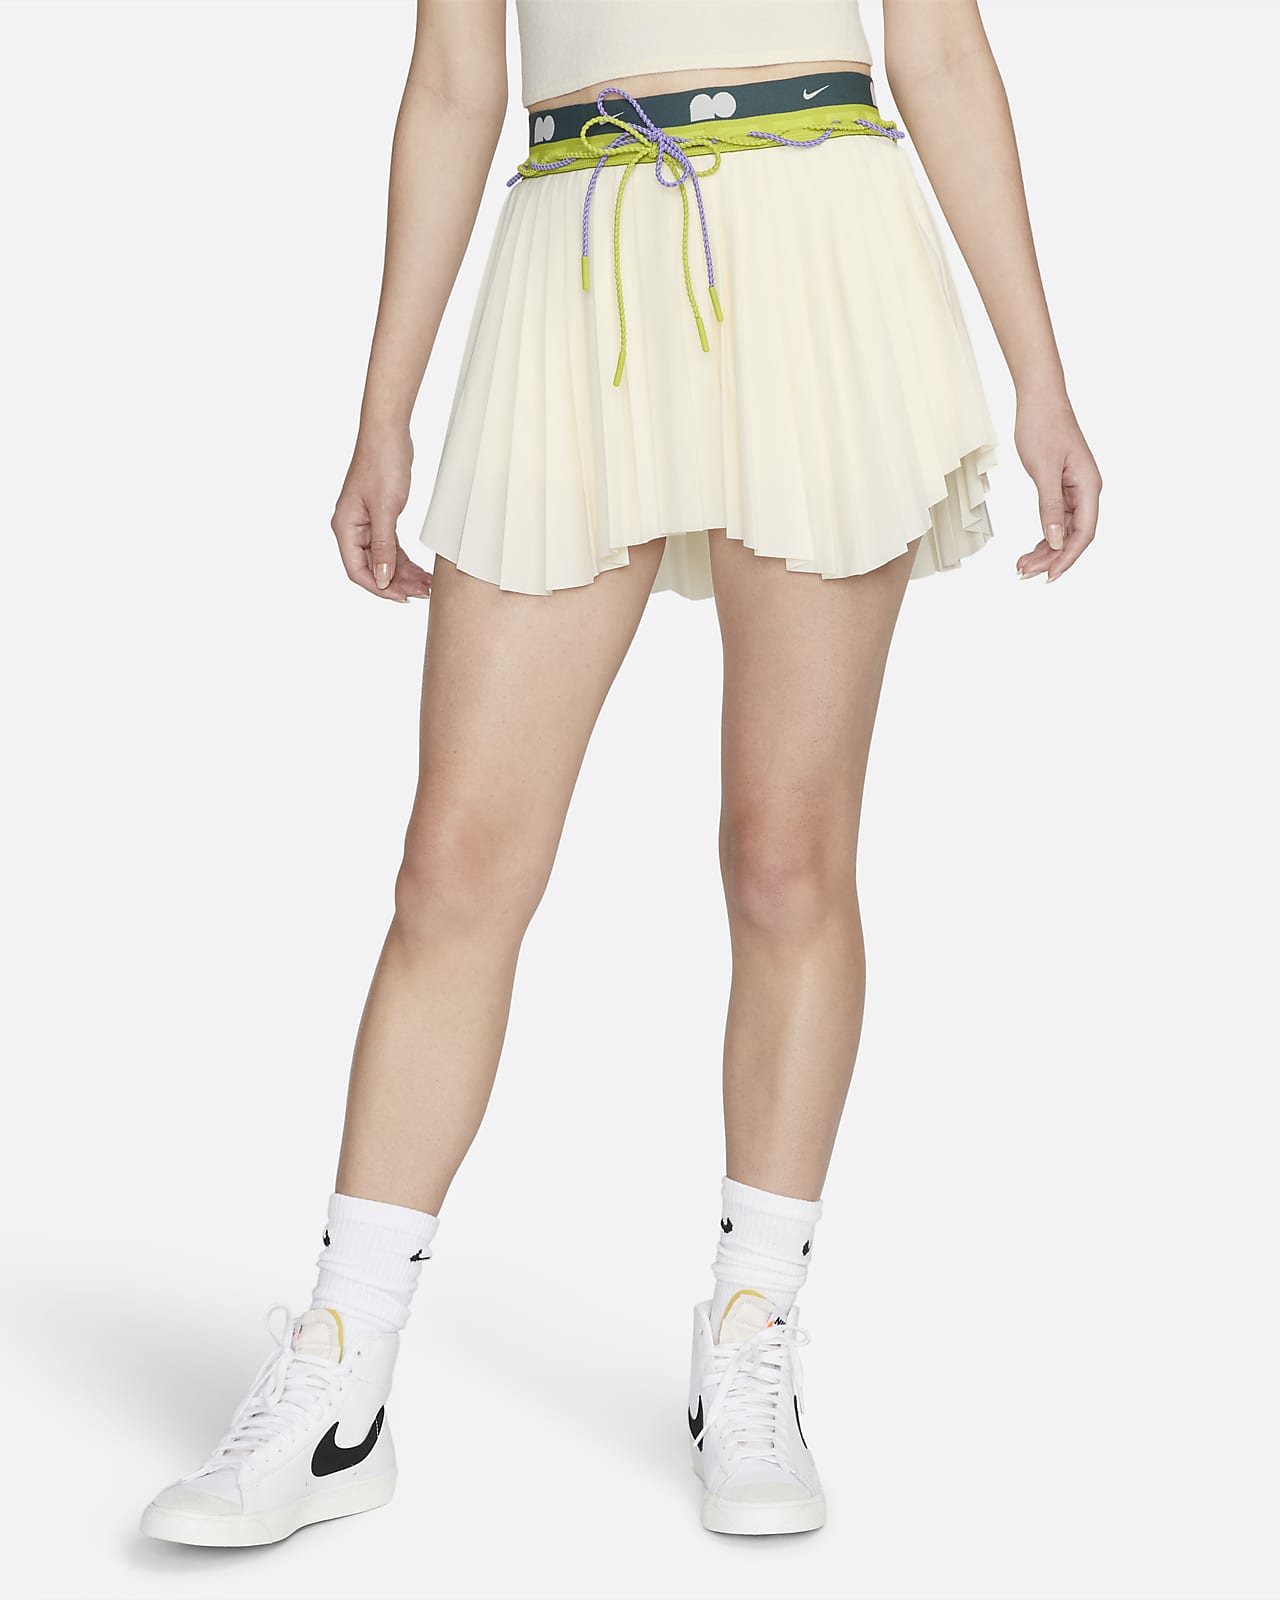 Naomi Osaka Women's Skirt.